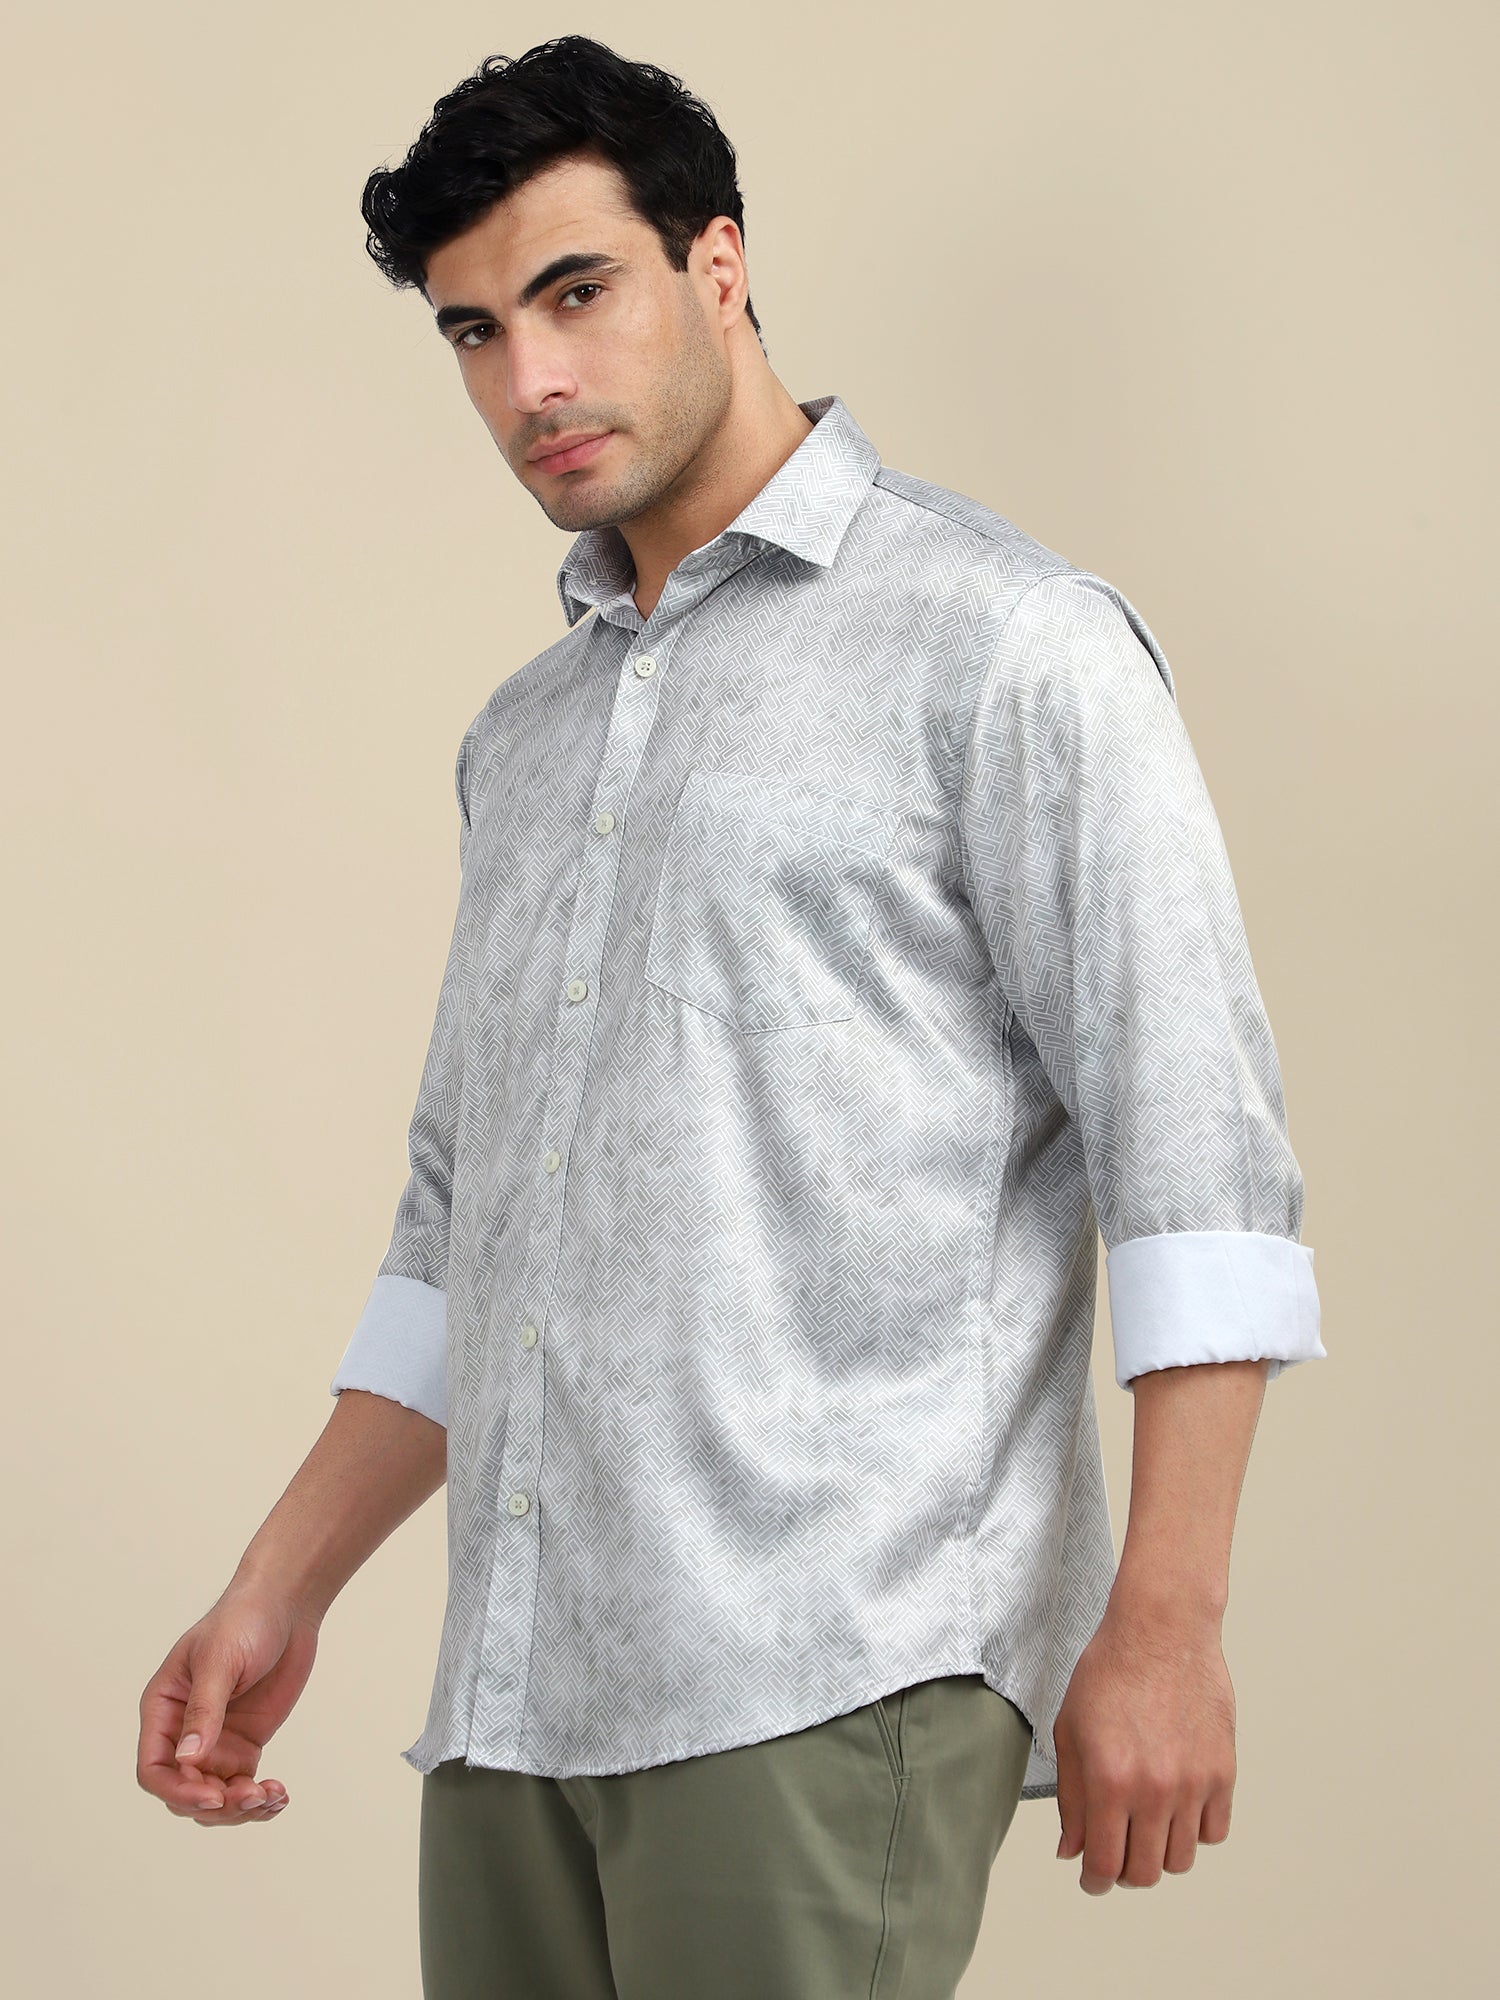 Men's Poly Satin Lycra Grey Digital Printed Shirt